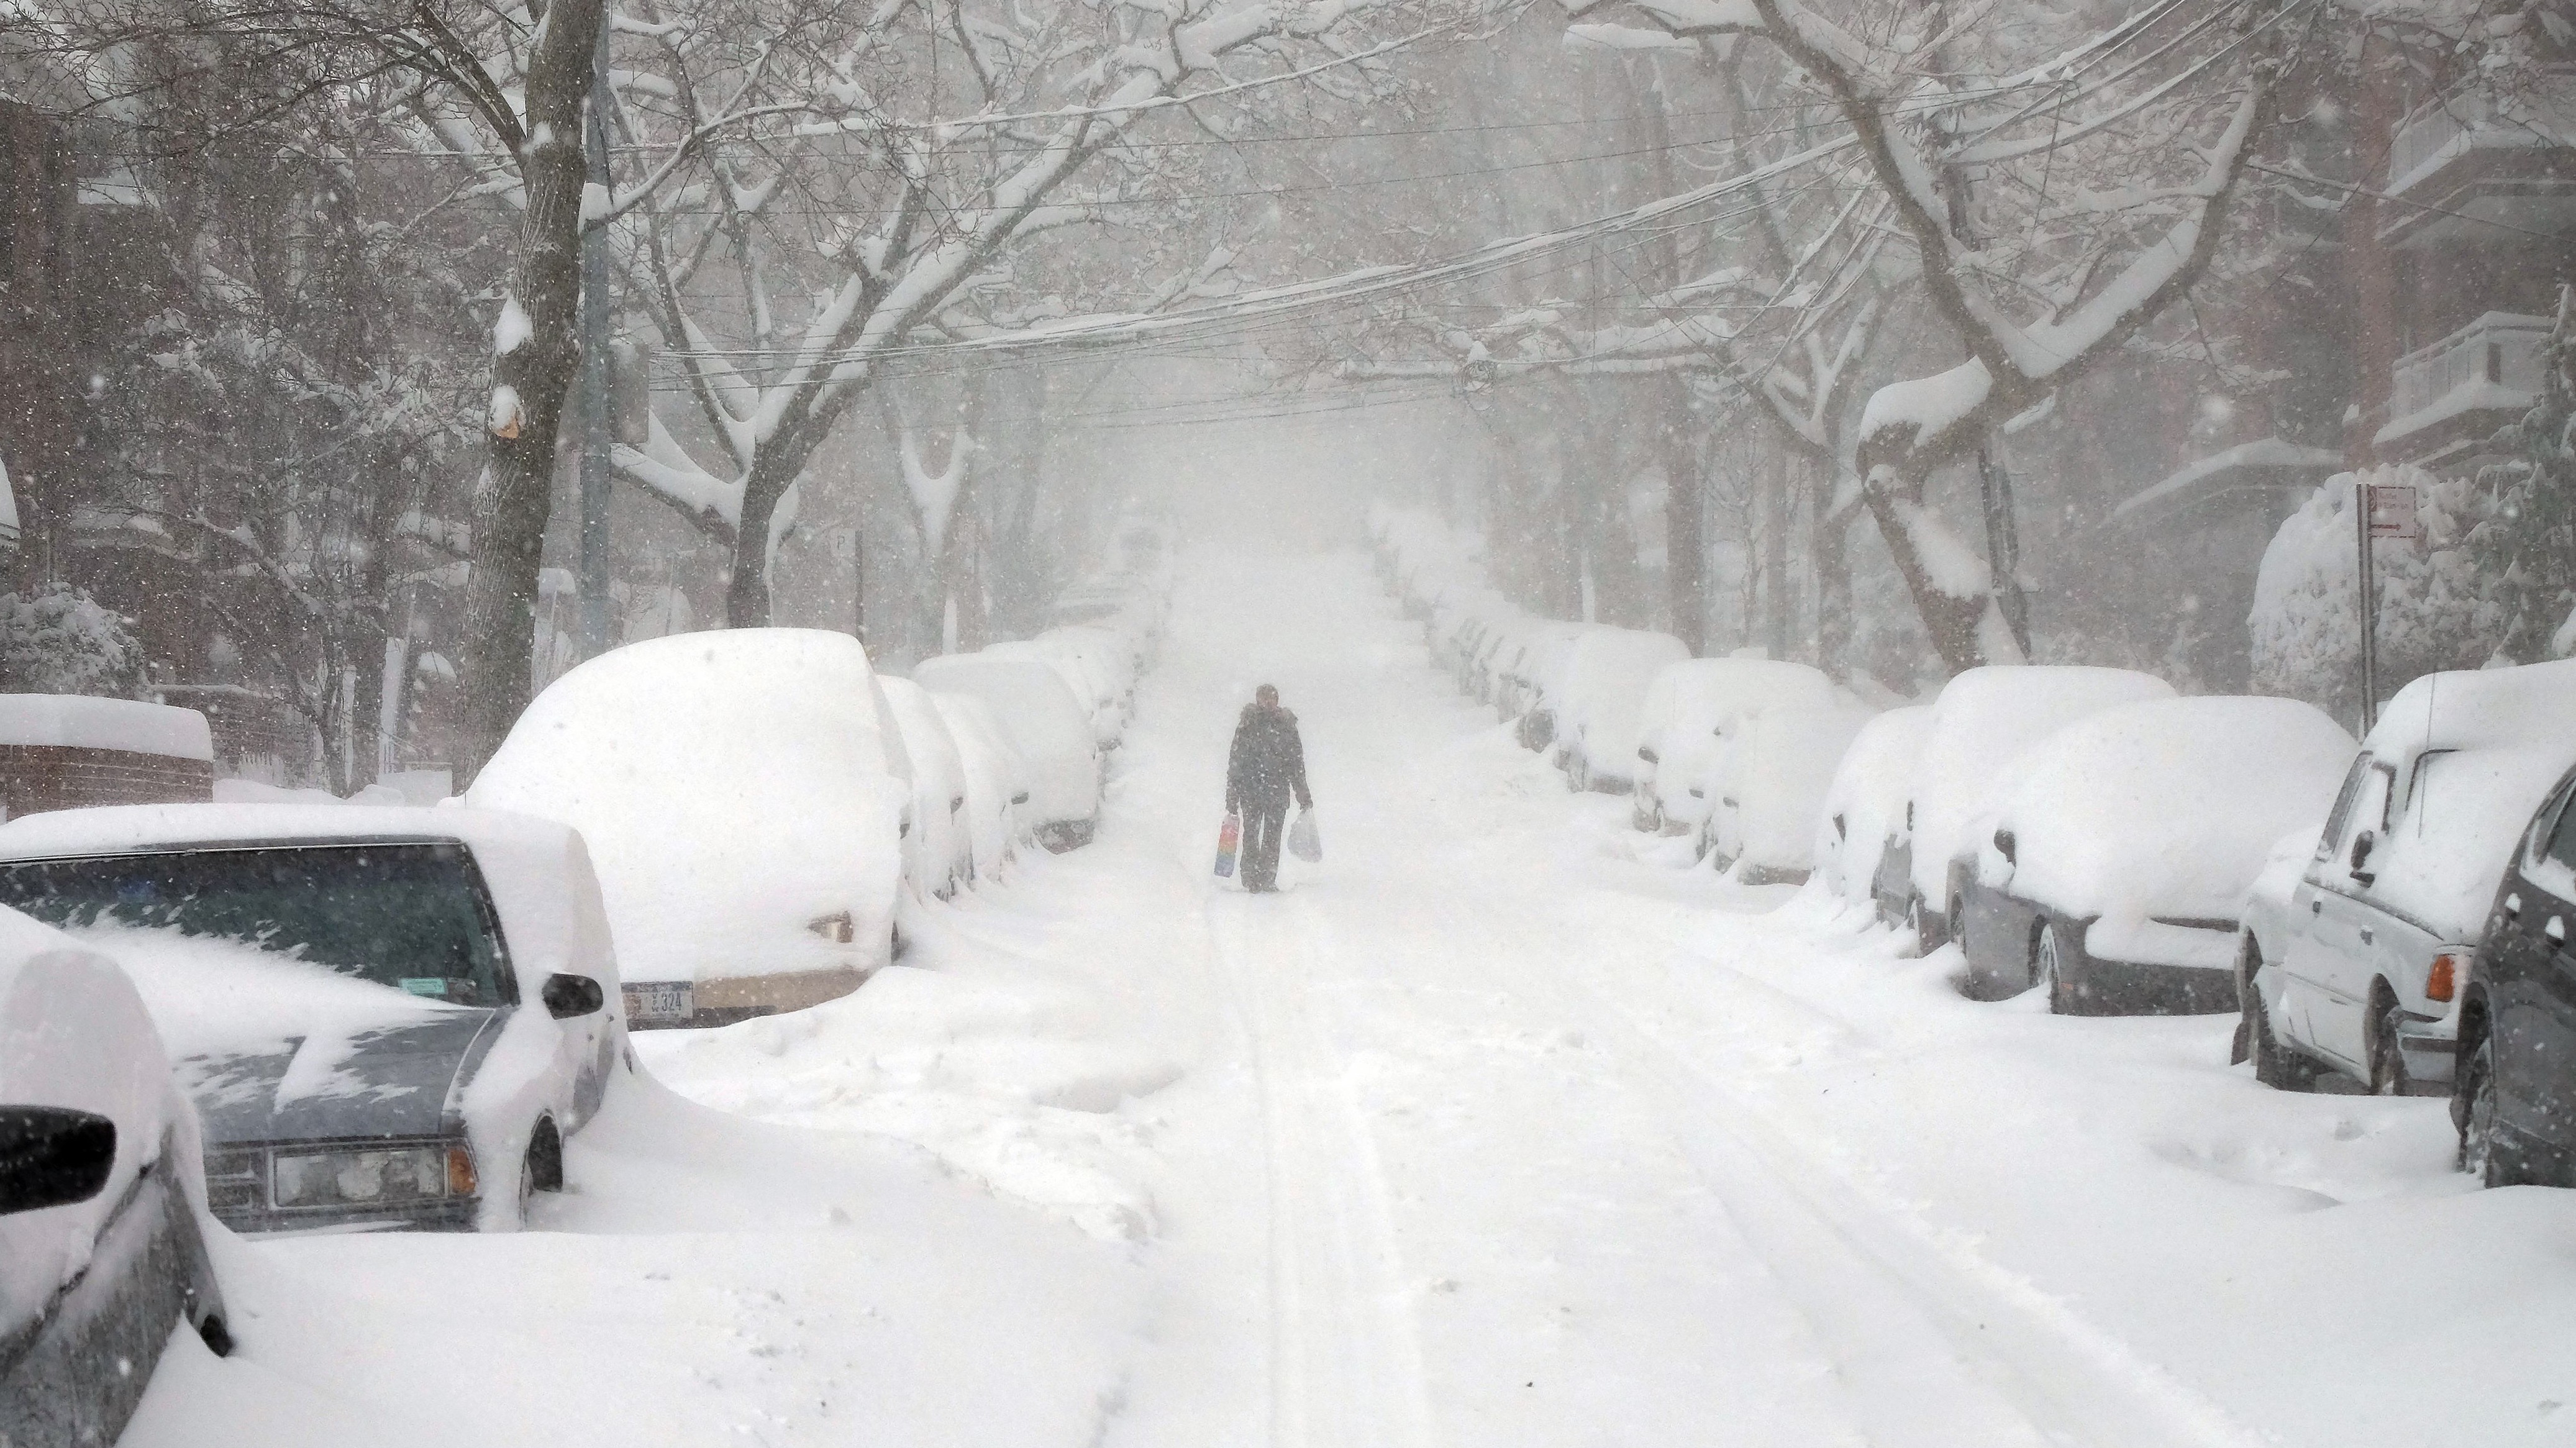 New york travel ban blizzard 2016 winter storm jonas